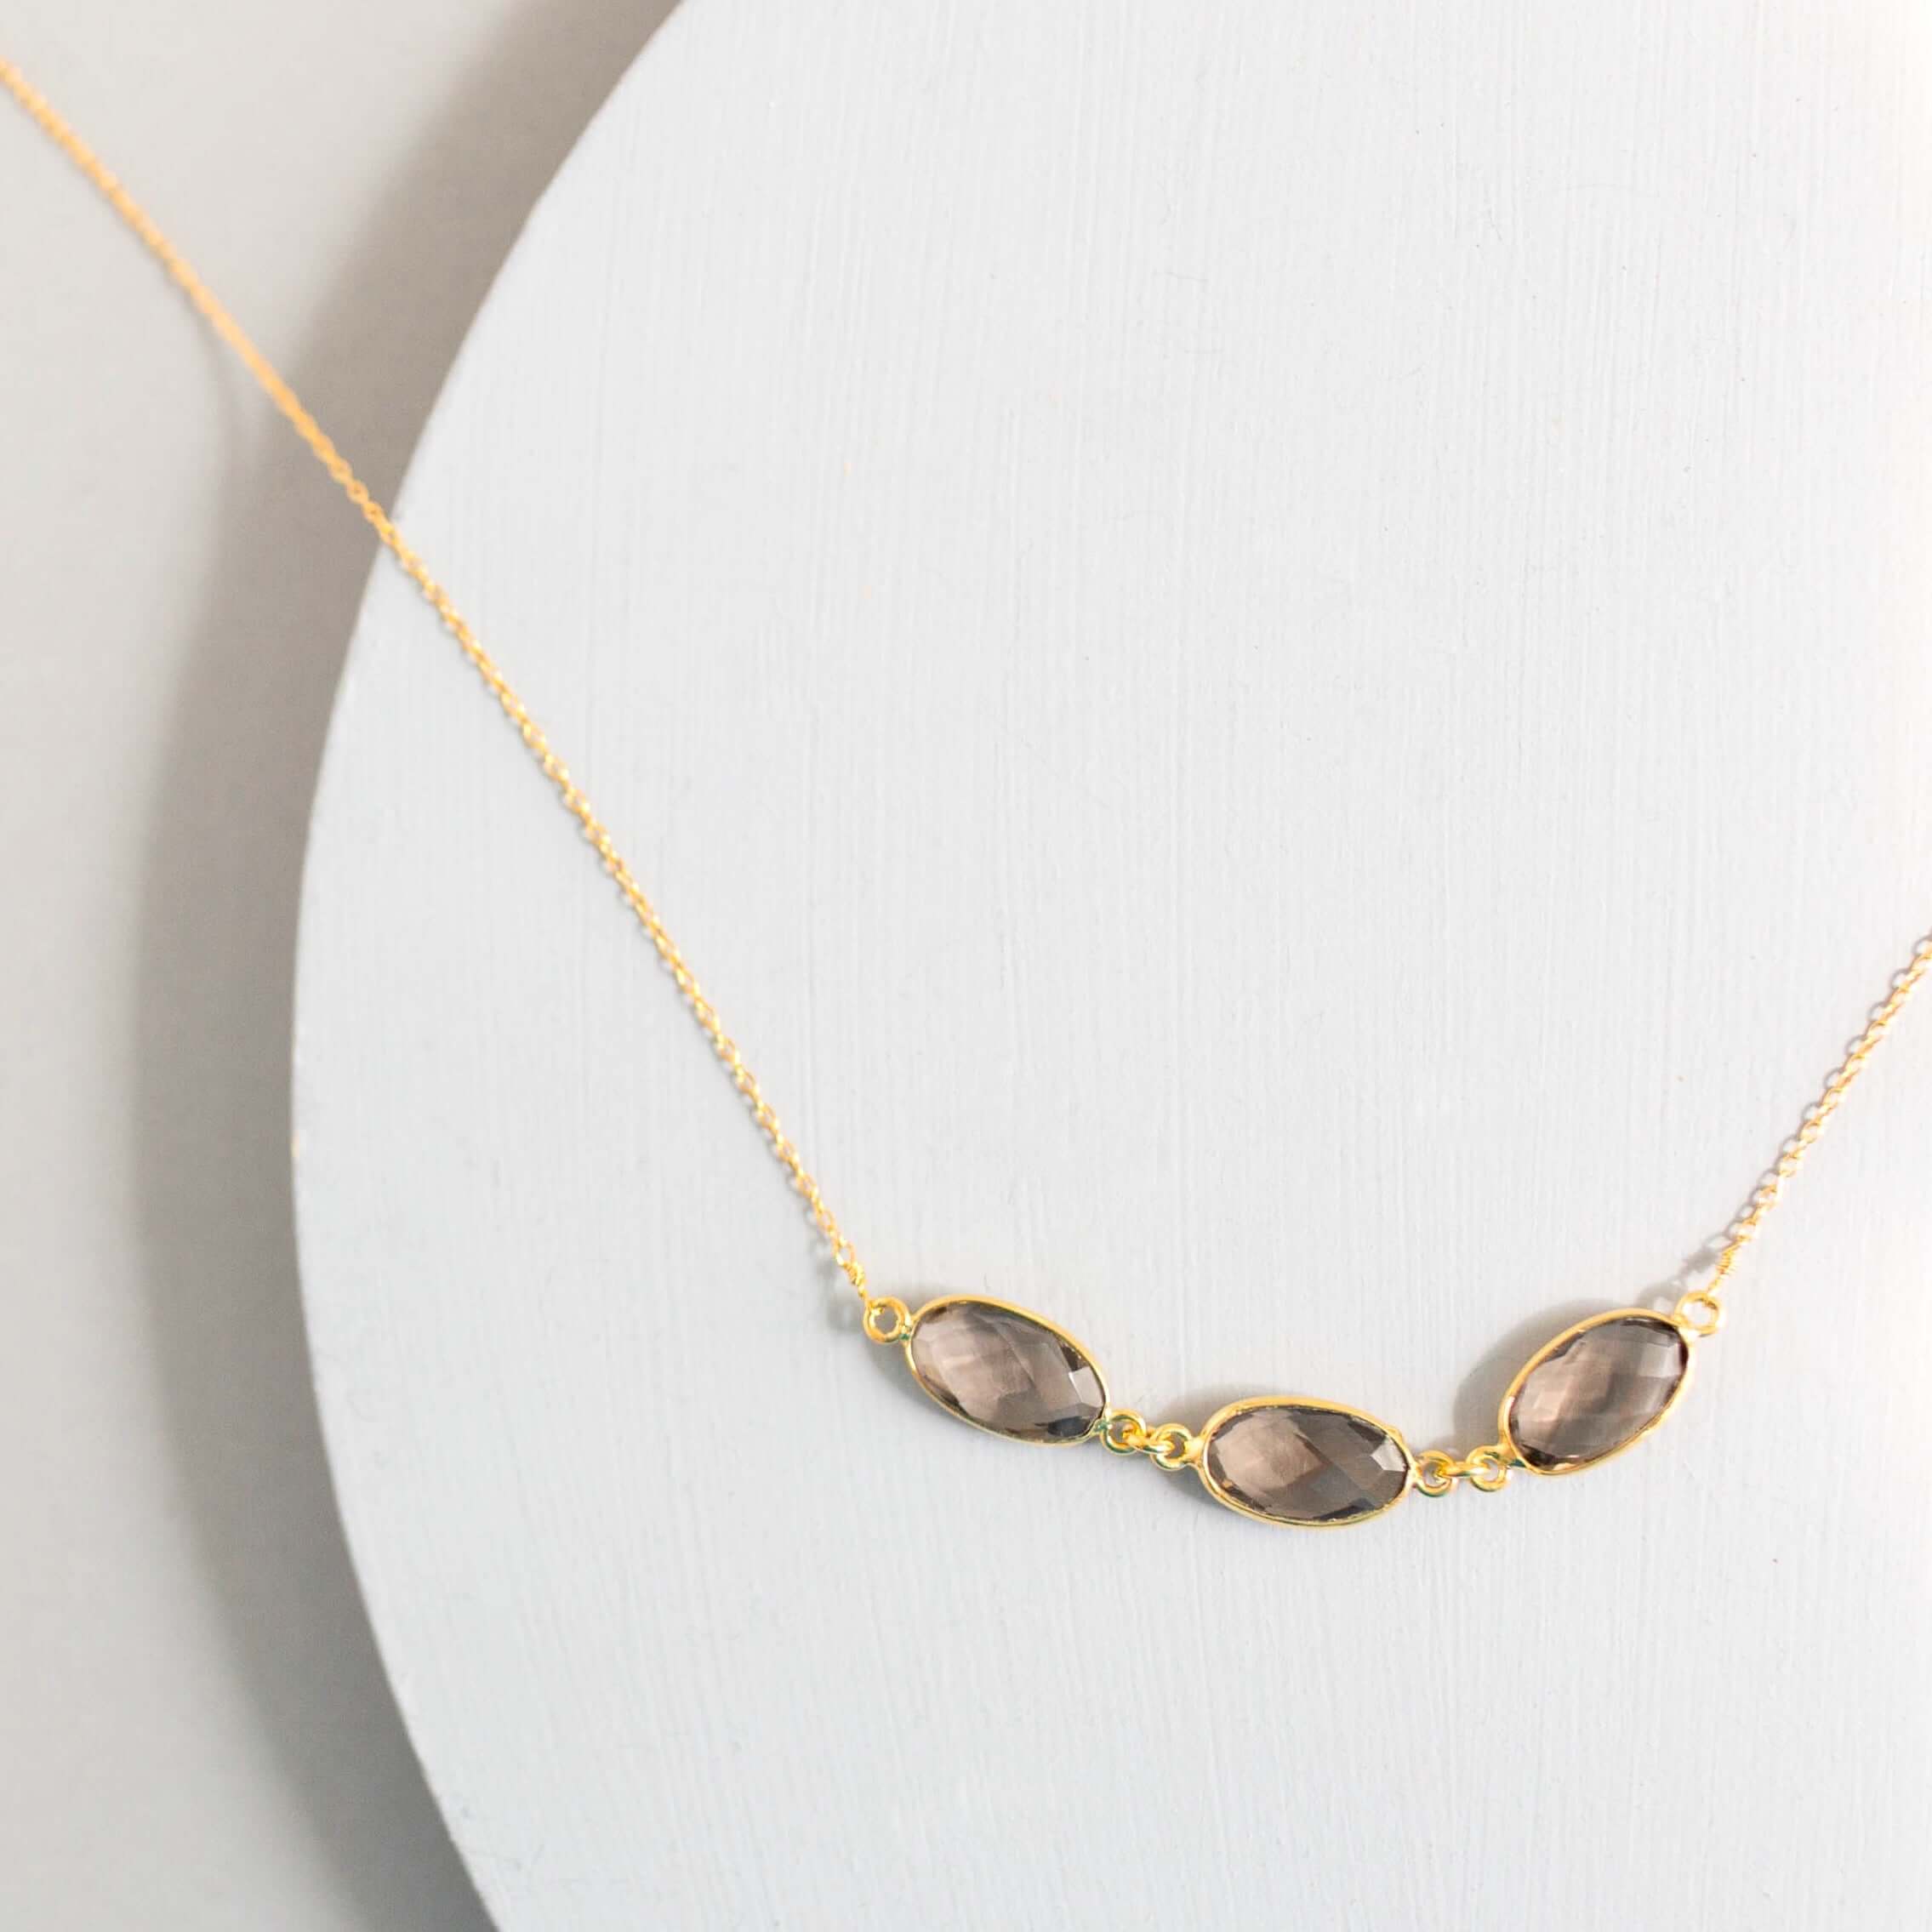 Gold necklace with 3 beautiful bezel-set smoky quartz gemstones